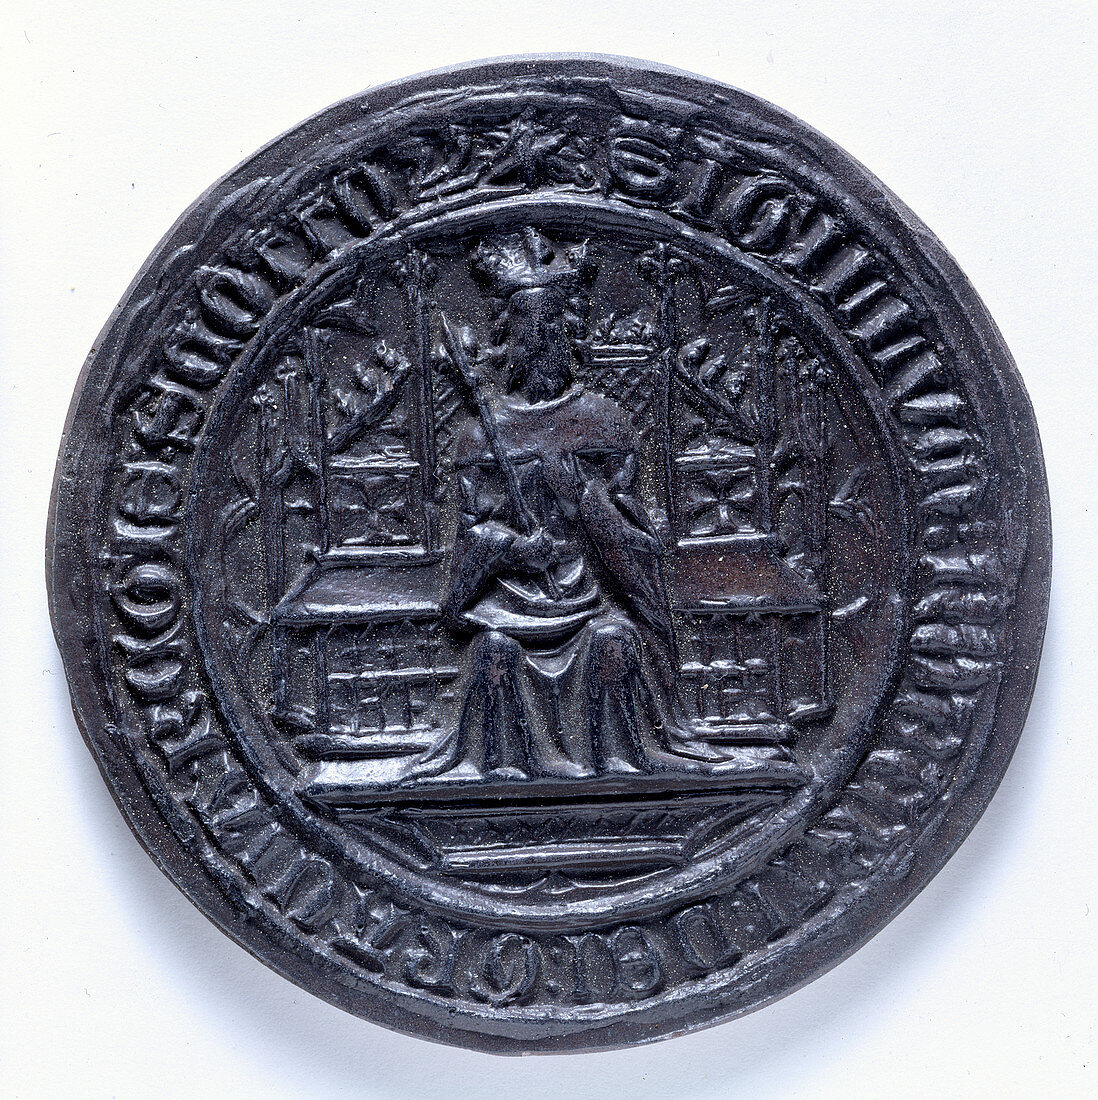 Seal of Robert III of Scotland